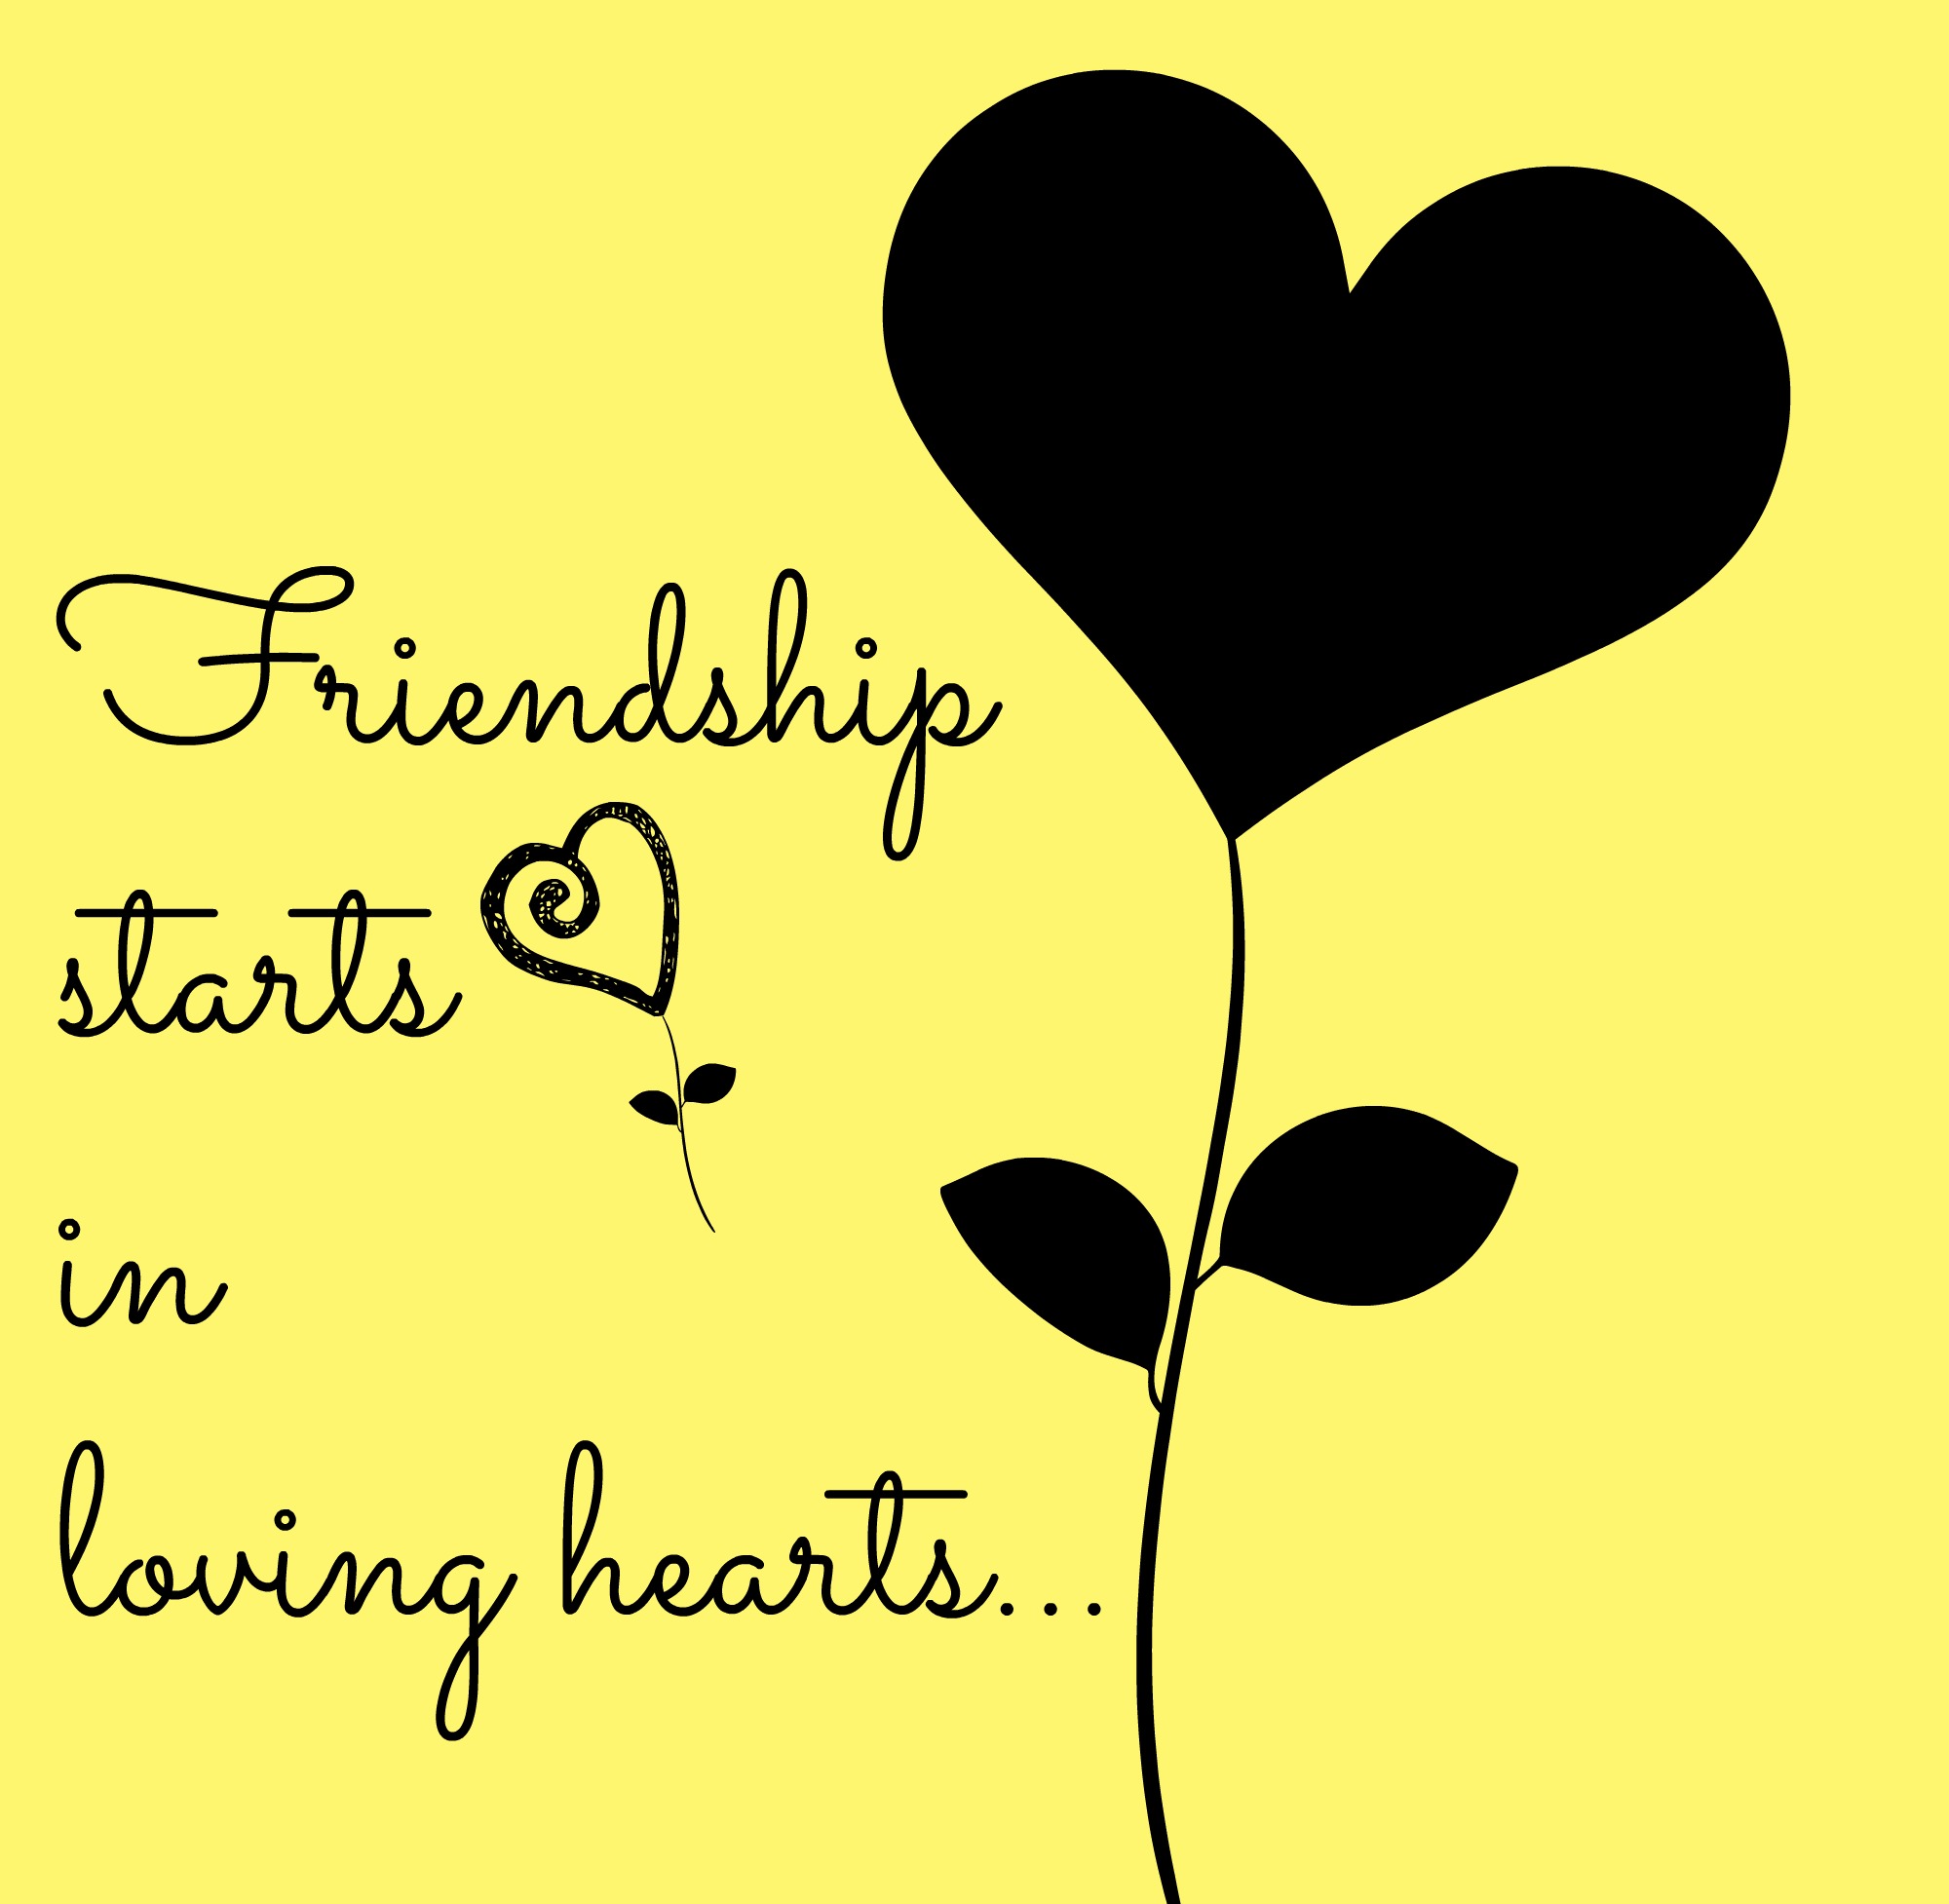 Friendship starts in loving hearts